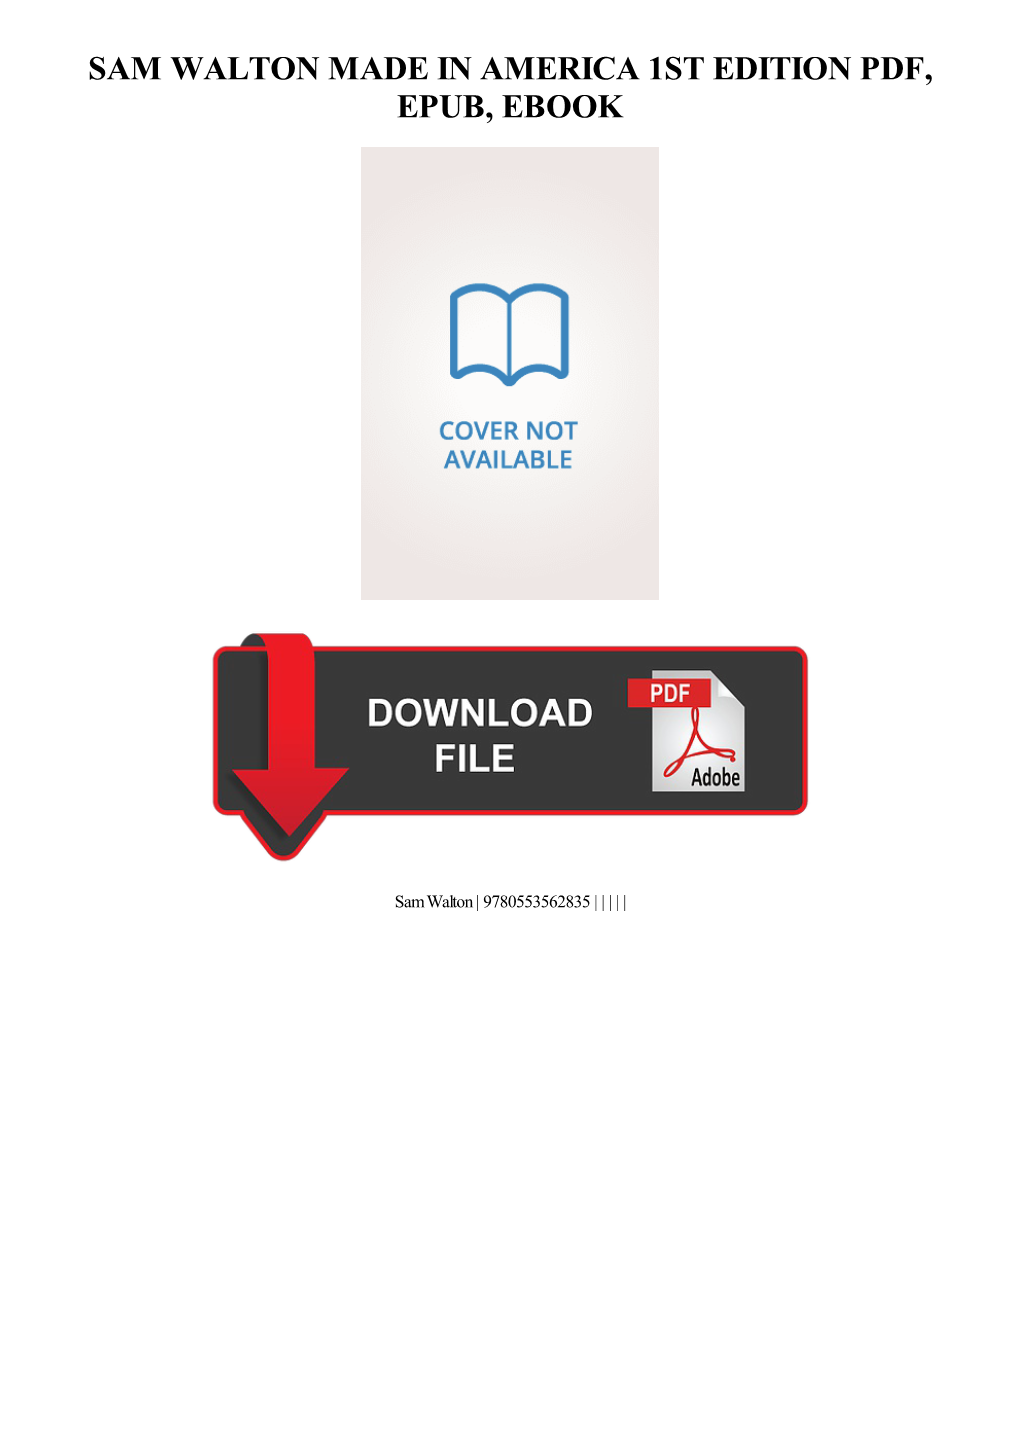 Ebook Download Sam Walton Made in America 1St Edition Ebook Free Download